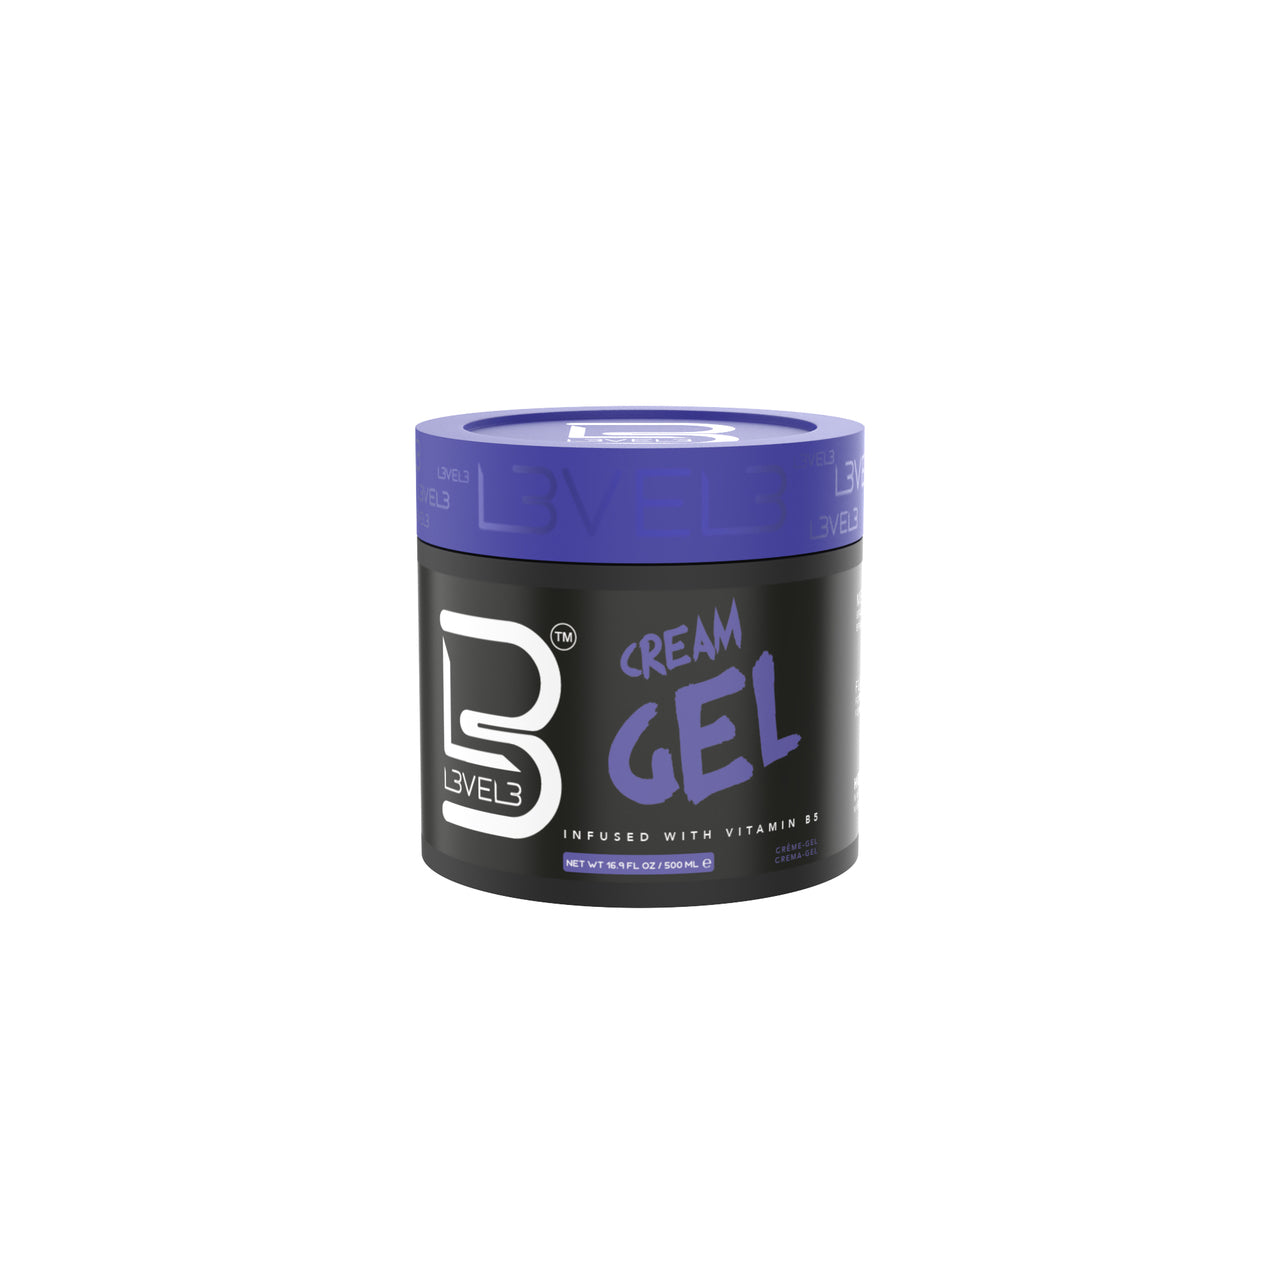 L3VEL3 - Cream Hair Gel 500 ml